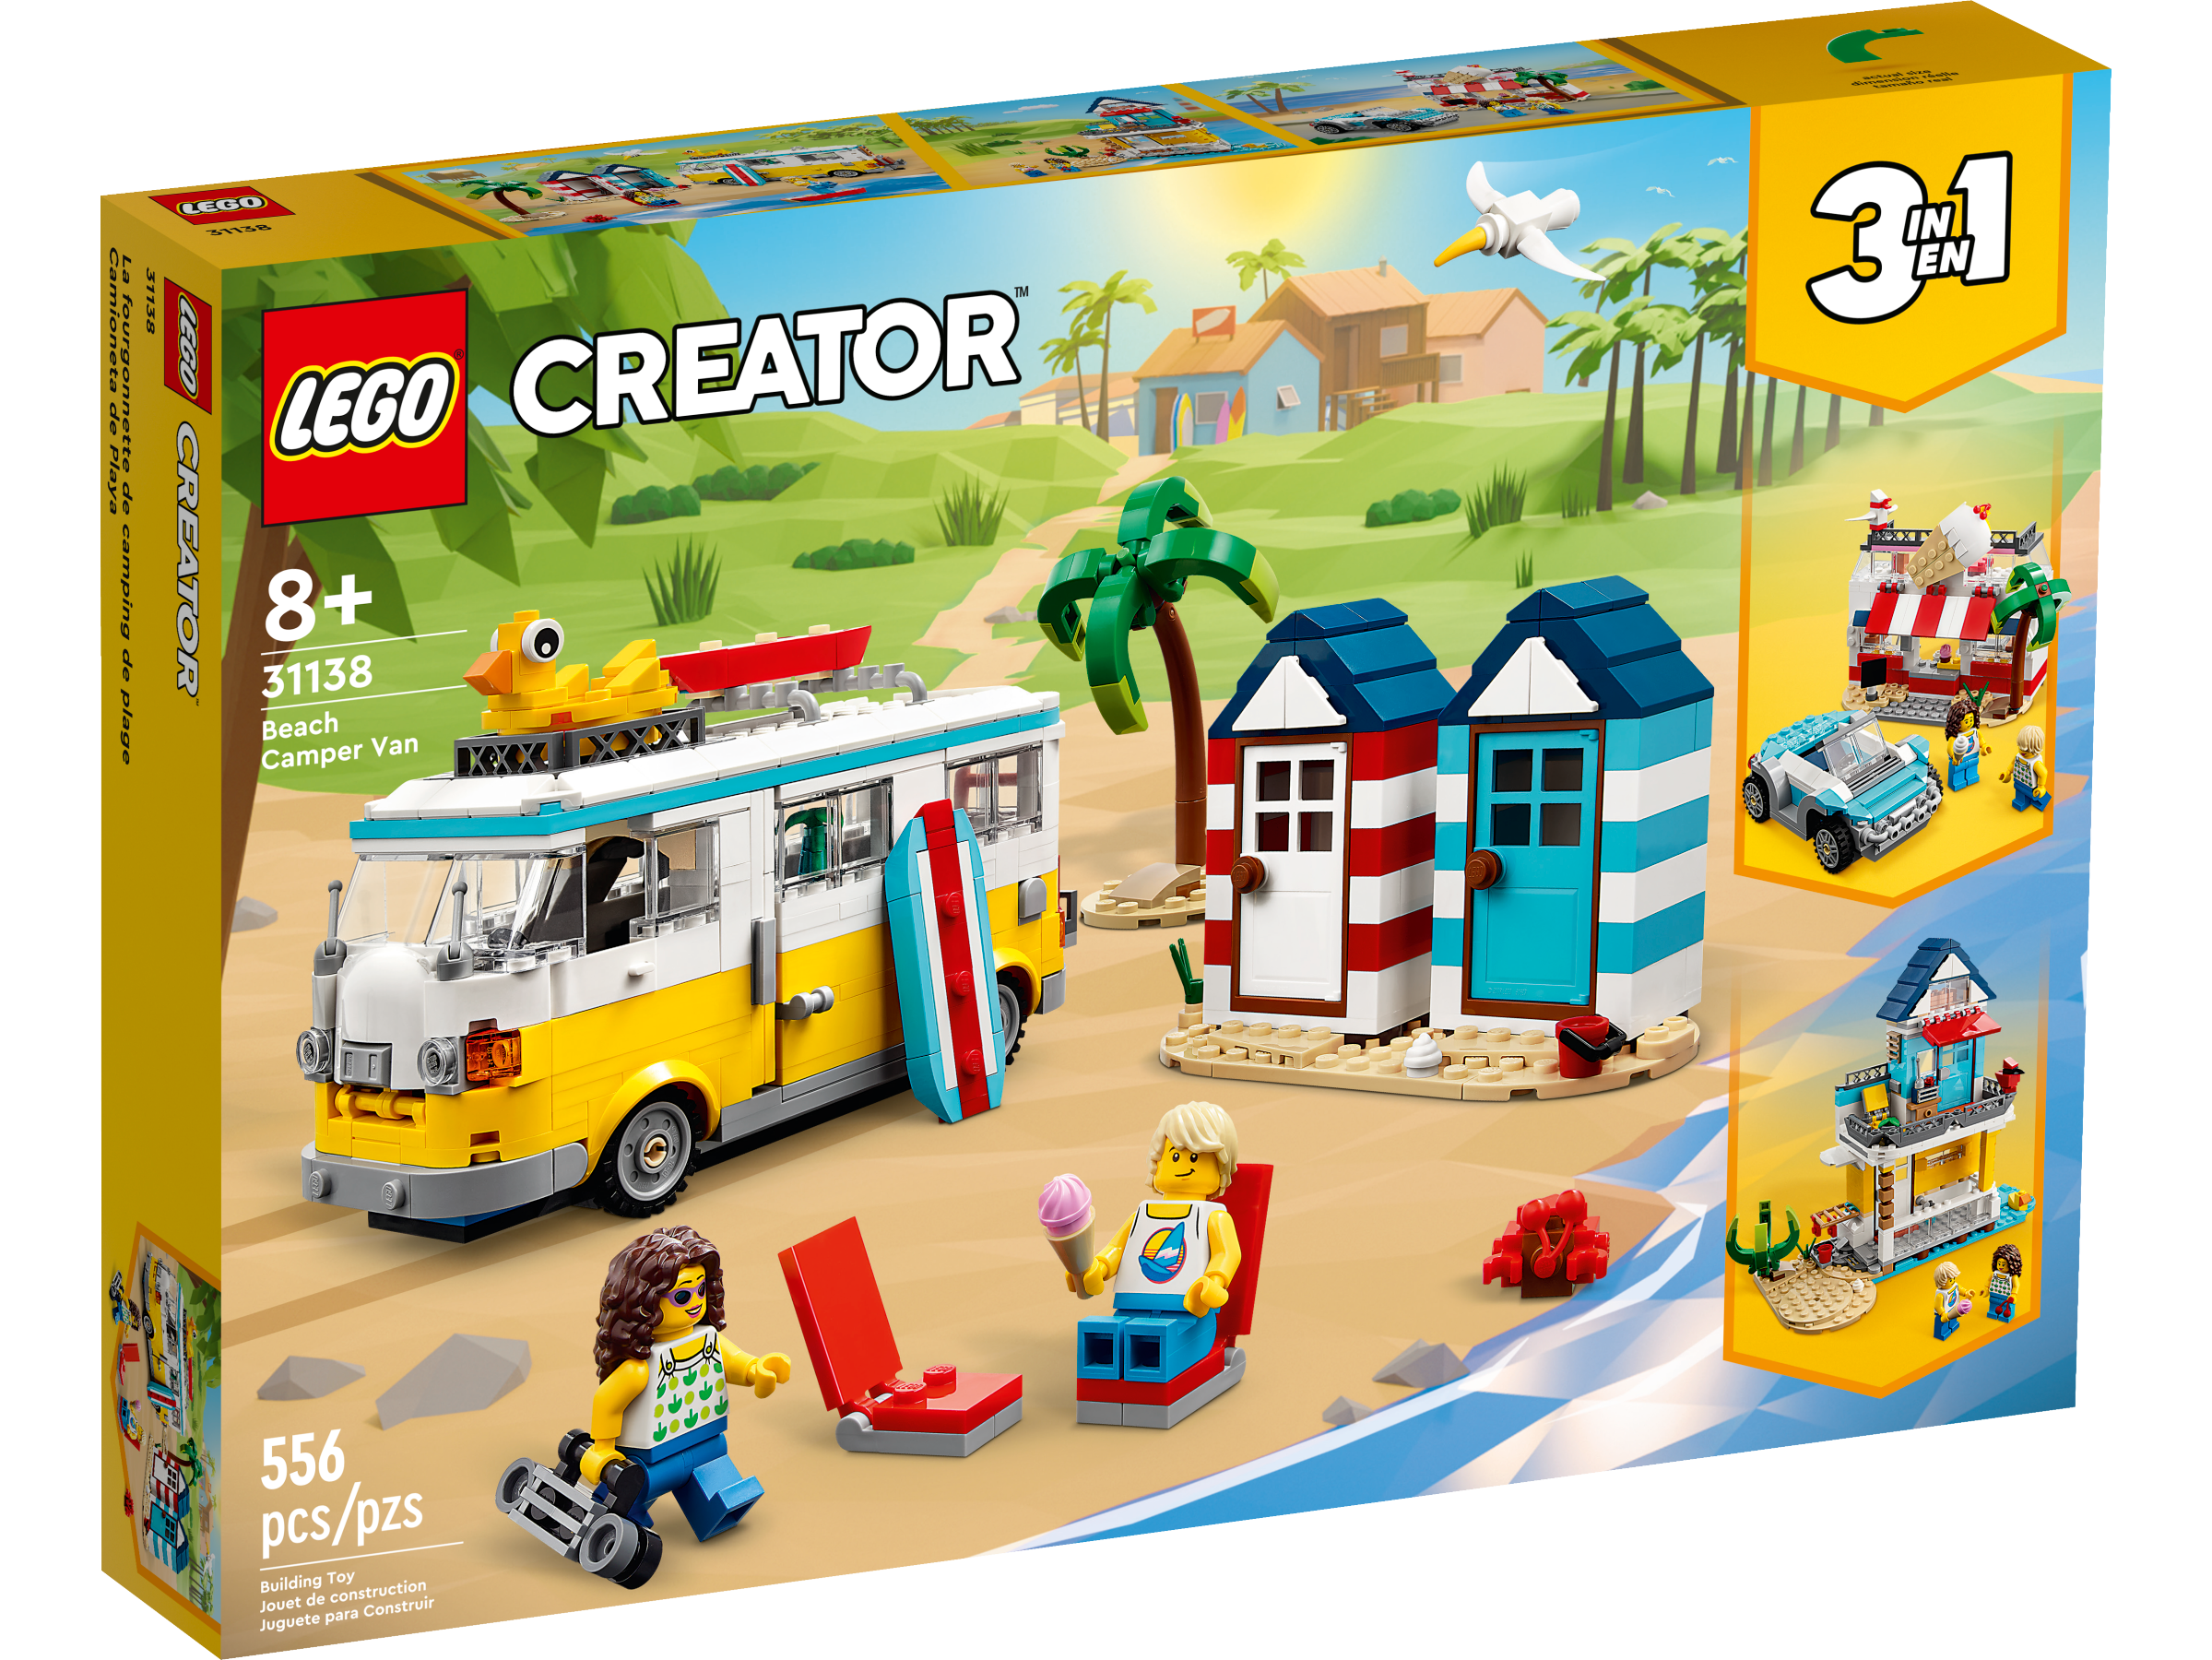 2023 Lego Creator 3 in 1 Sets - Full Details 